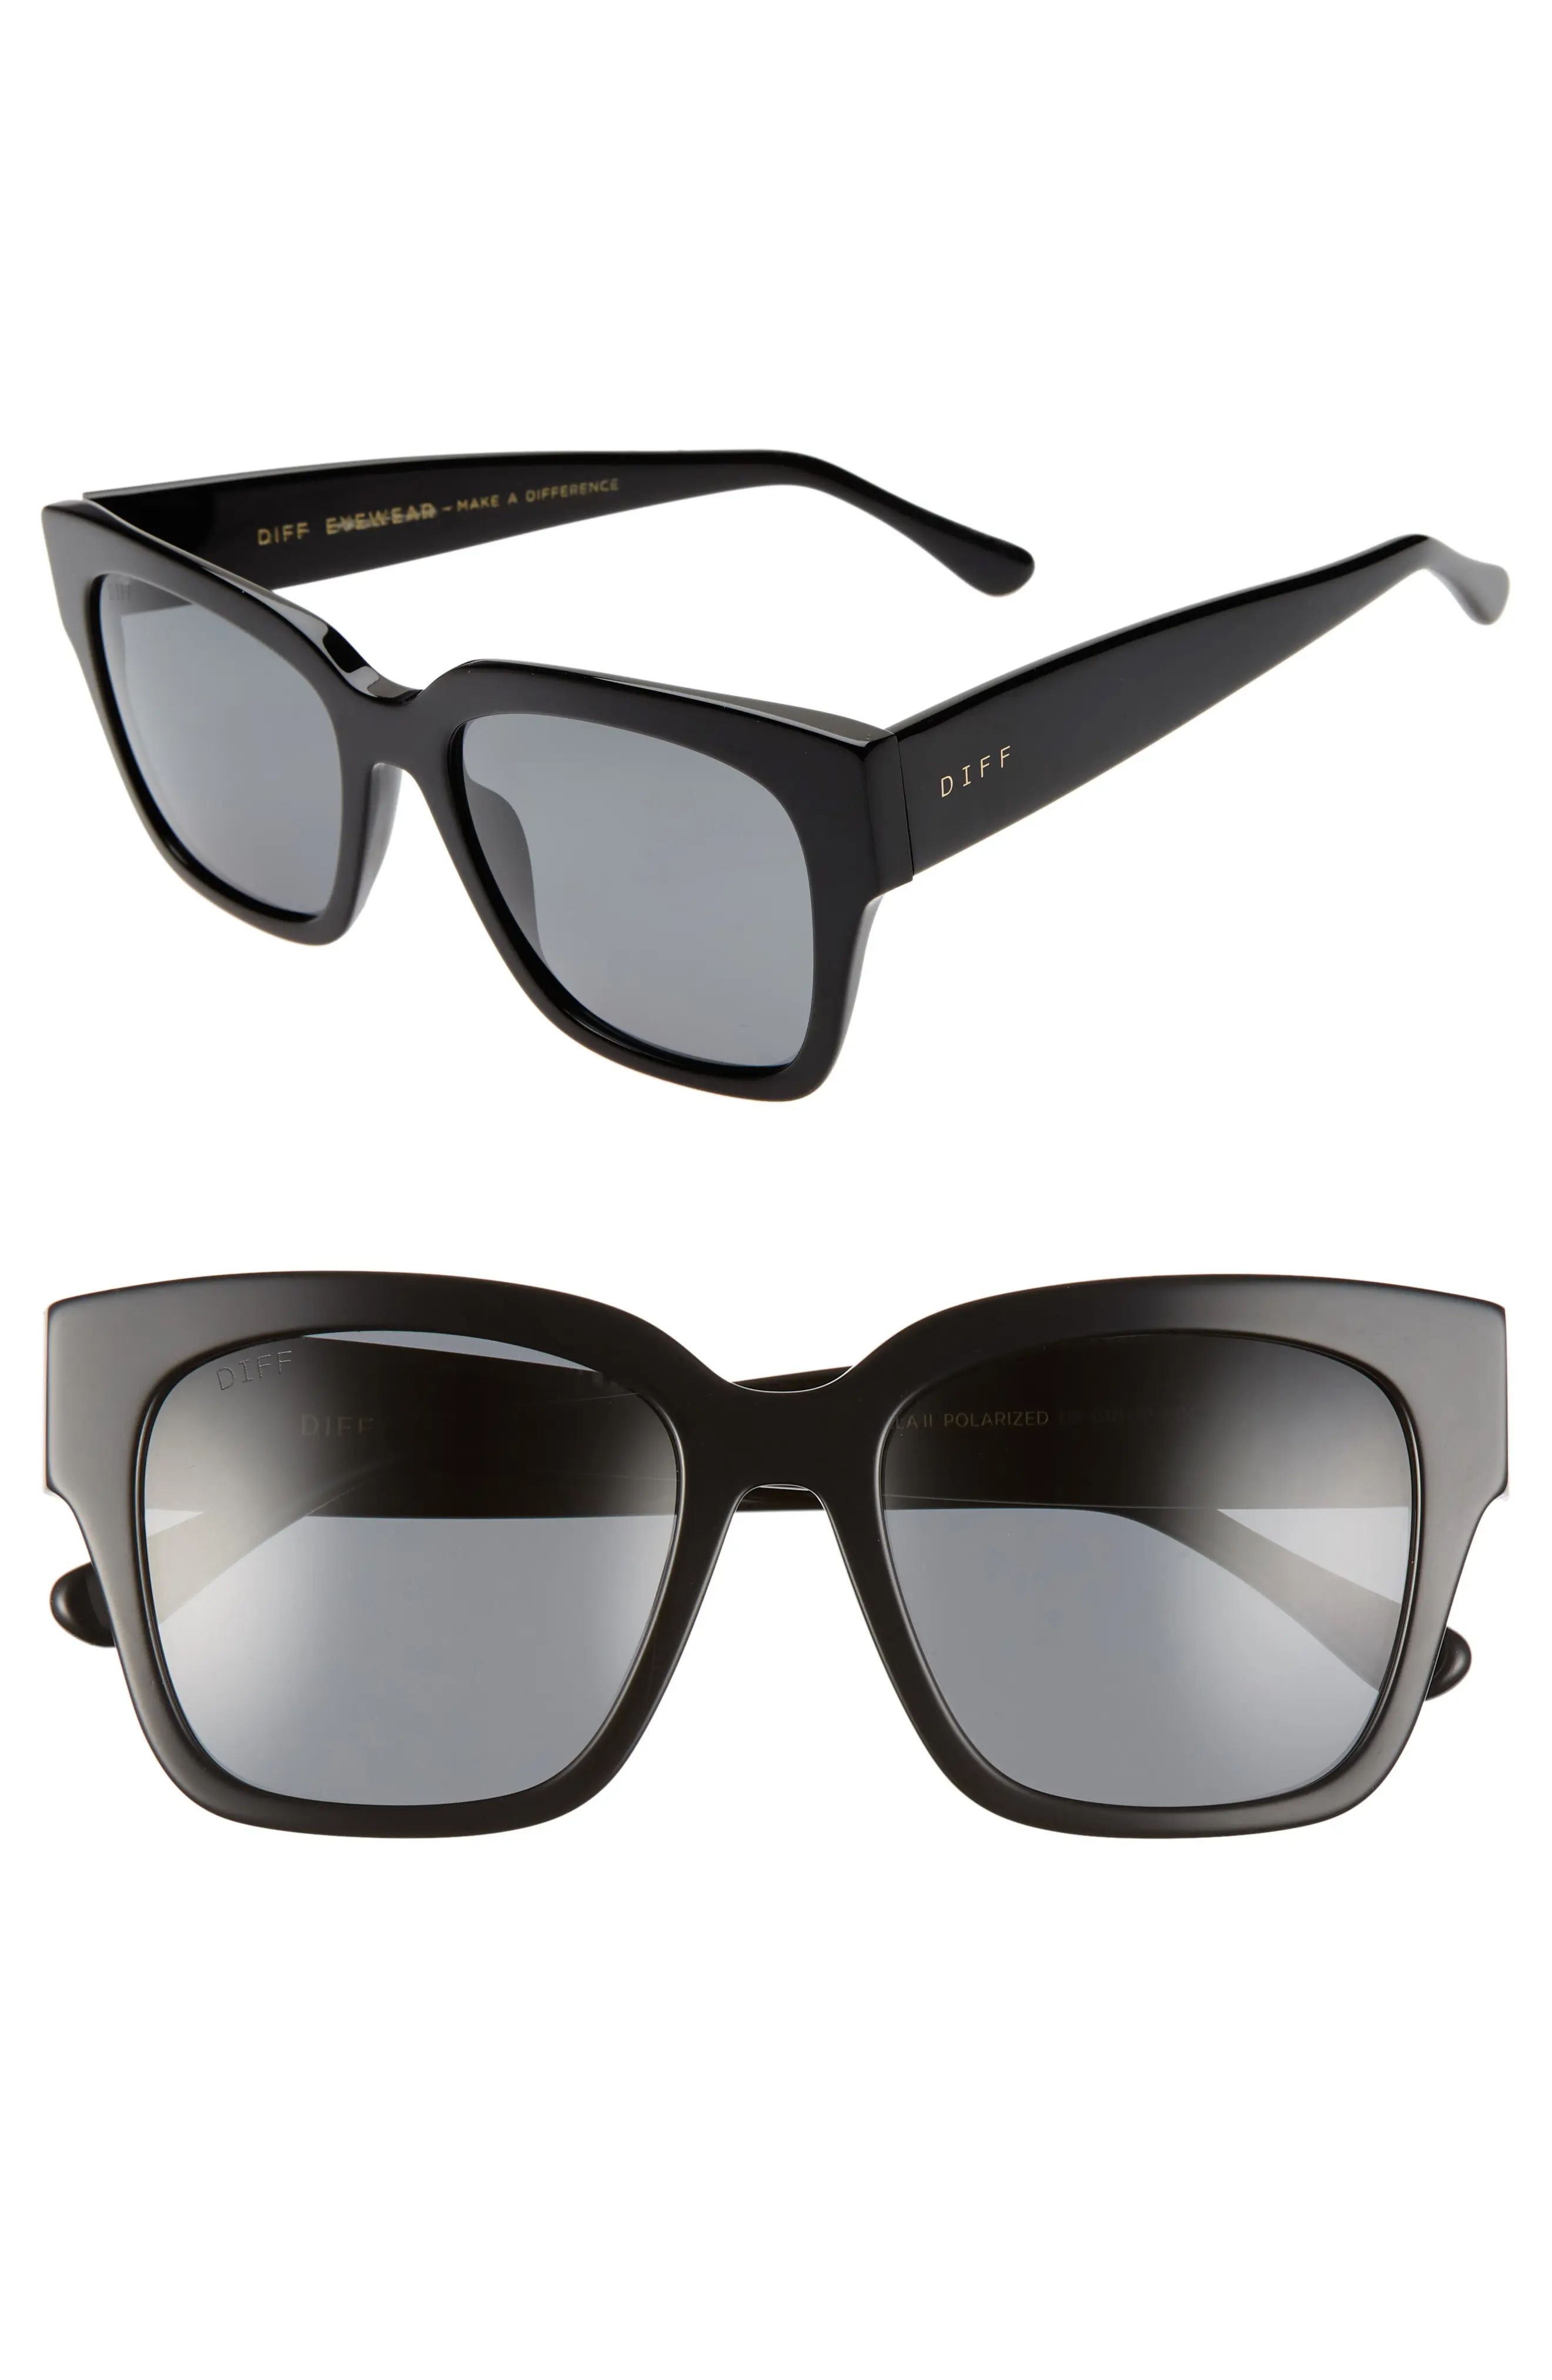 DIFF Bella II 55mm Polarized Square Cat Eye Sunglasses in Black/Grey at Nordstrom | Nordstrom